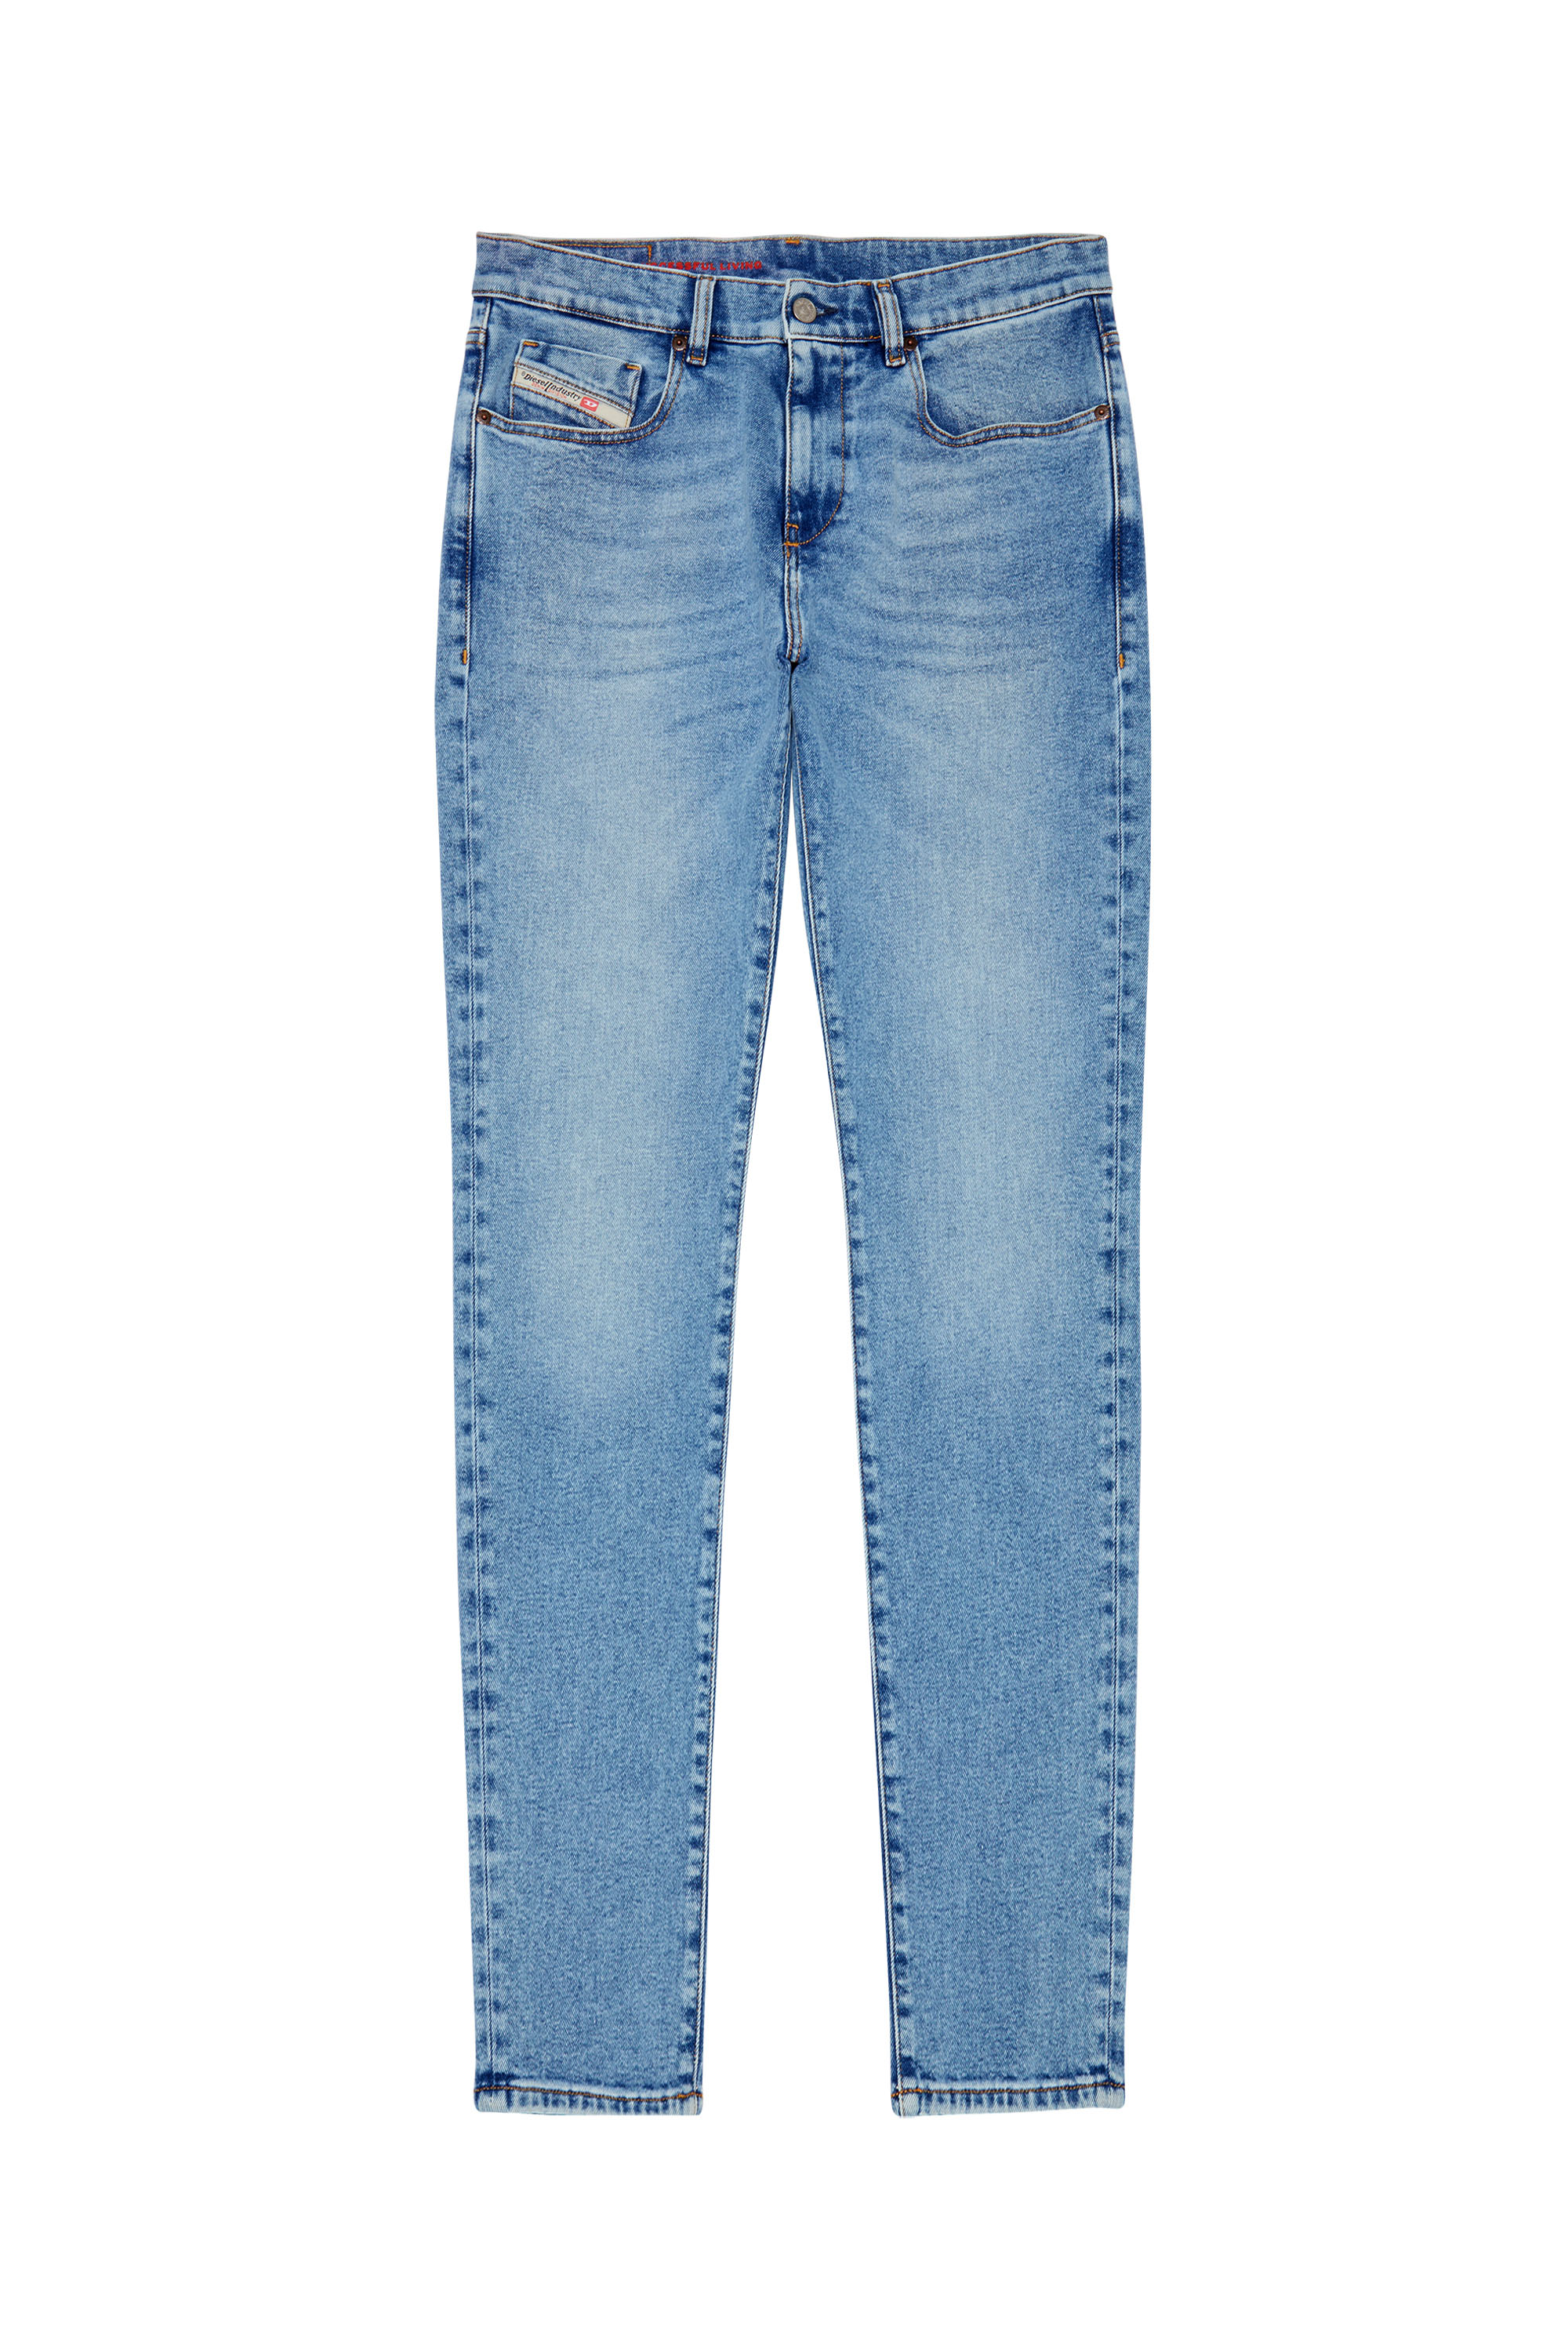 2019 D-STRUKT 09B92 Slim Jeans, Azul Claro - Vaqueros